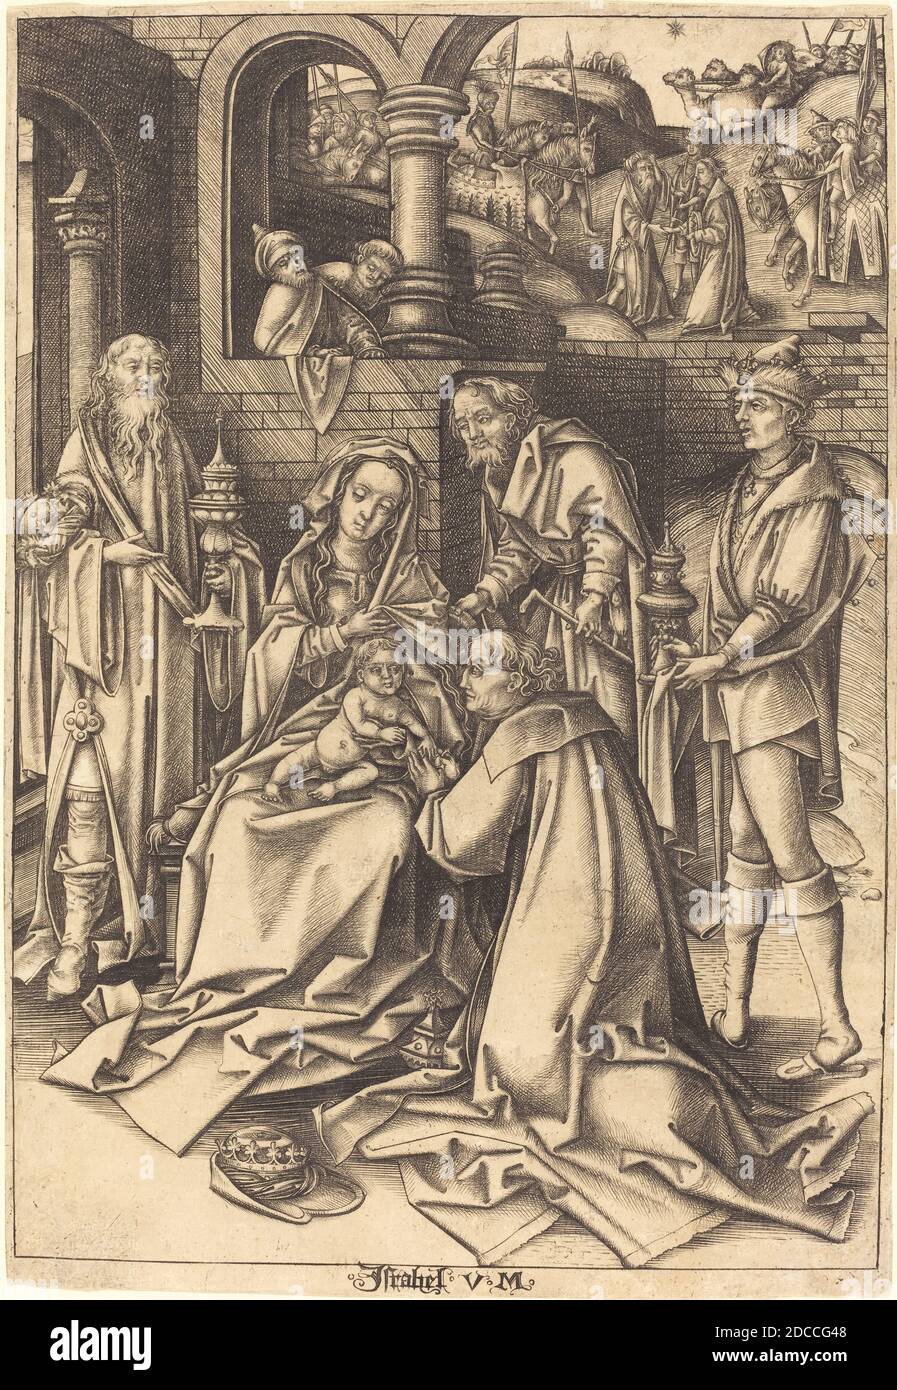 Israhel van Meckenem, (artist), German, c. 1445 - 1503, Hans Holbein the Elder, (artist after), German, c. 1465 - 1524, The Adoration of the Magi, The Life of the Virgin, (series), c. 1490/1500, engraving Stock Photo